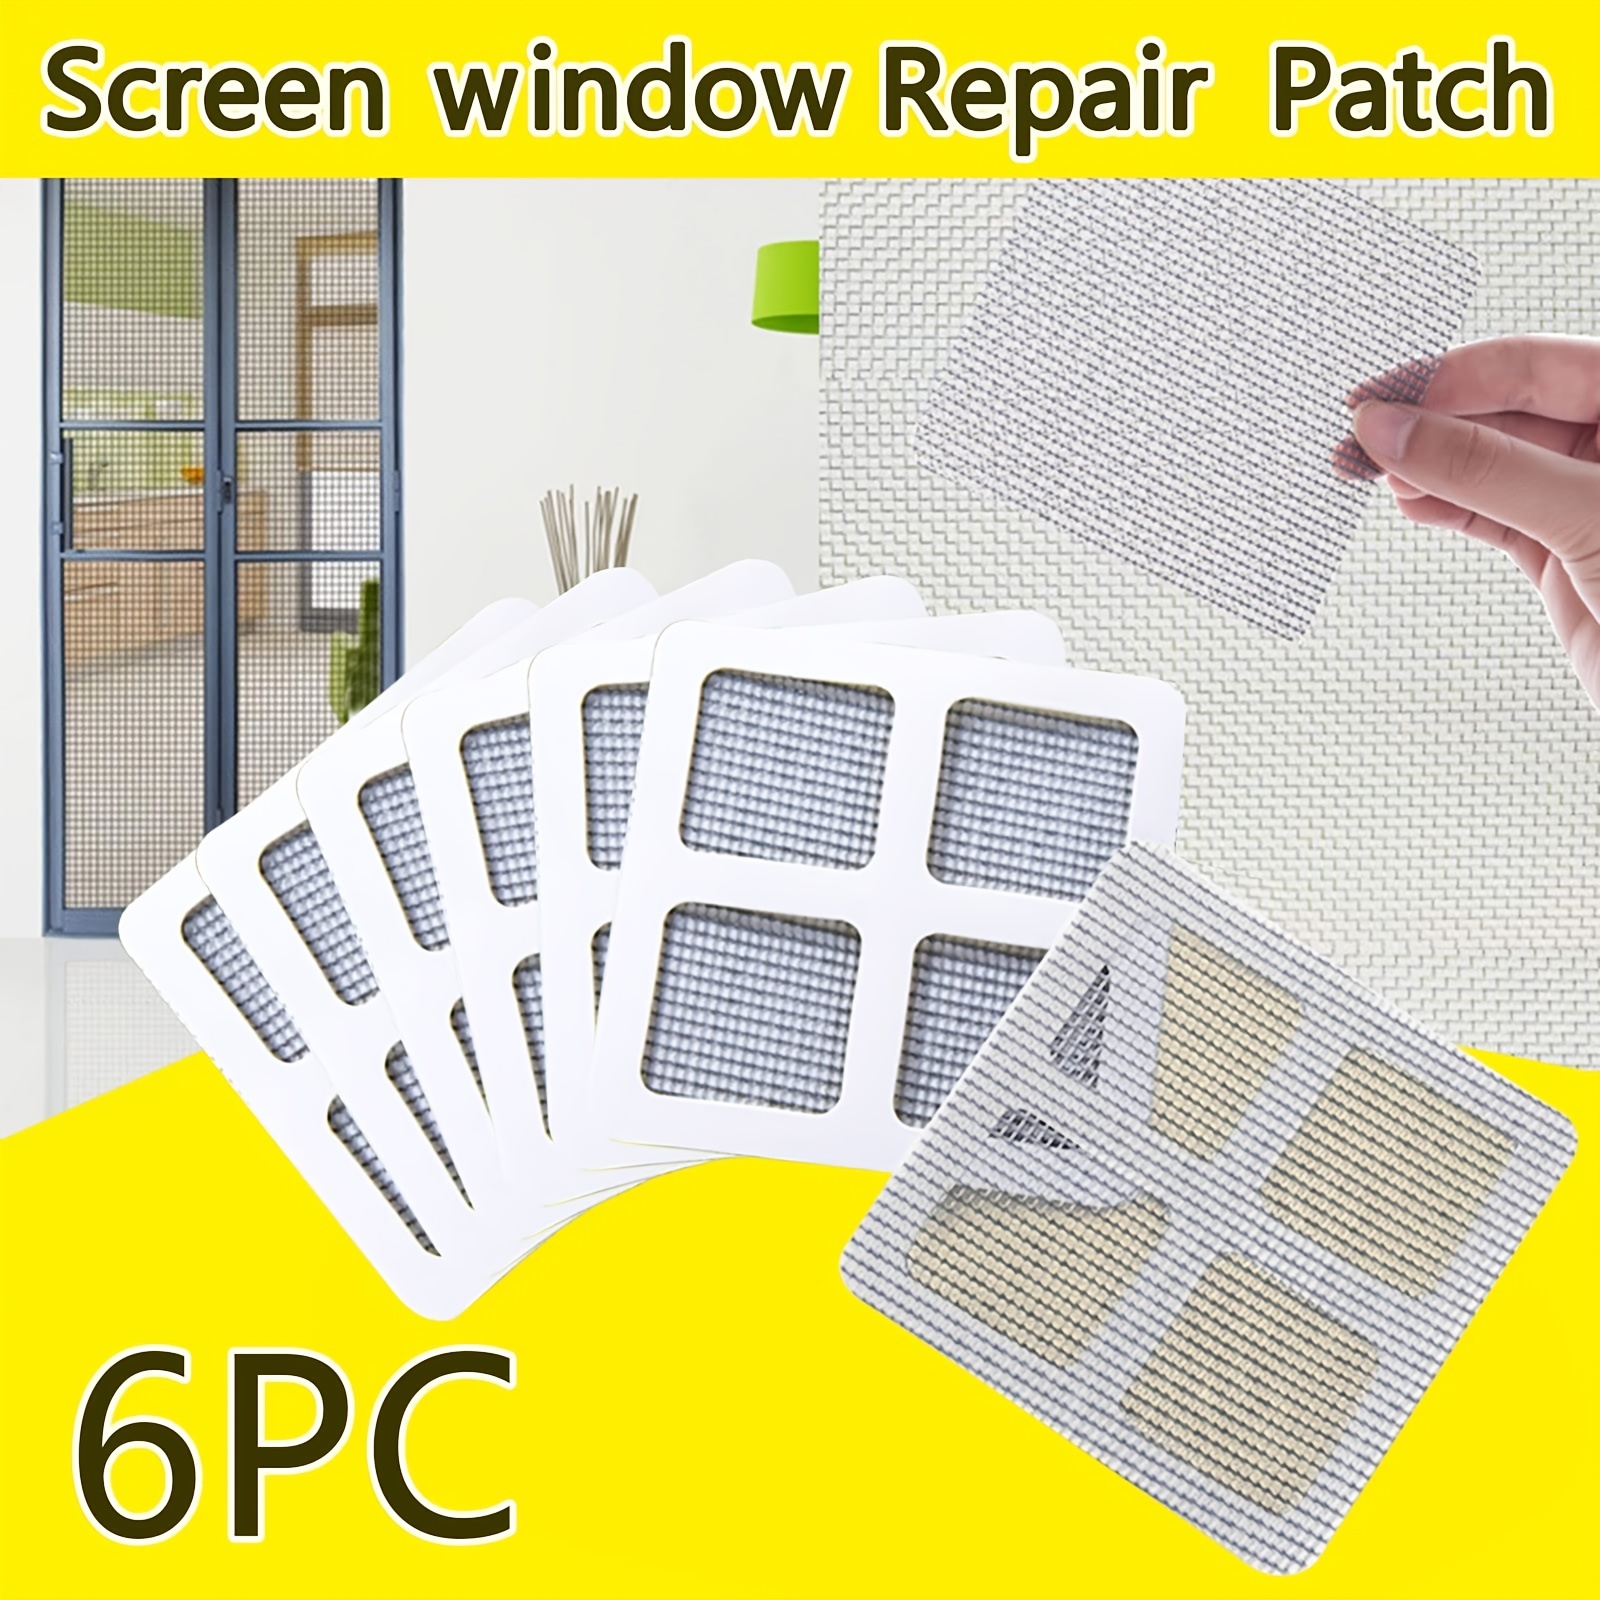 FLYZZZ Screen Repair Kit, Waterproof Fiberglass Repair Tape, 3-Layer Strong Adhesive Window Screen Doors Patch Tape Suitable for Covering Holes&Tears